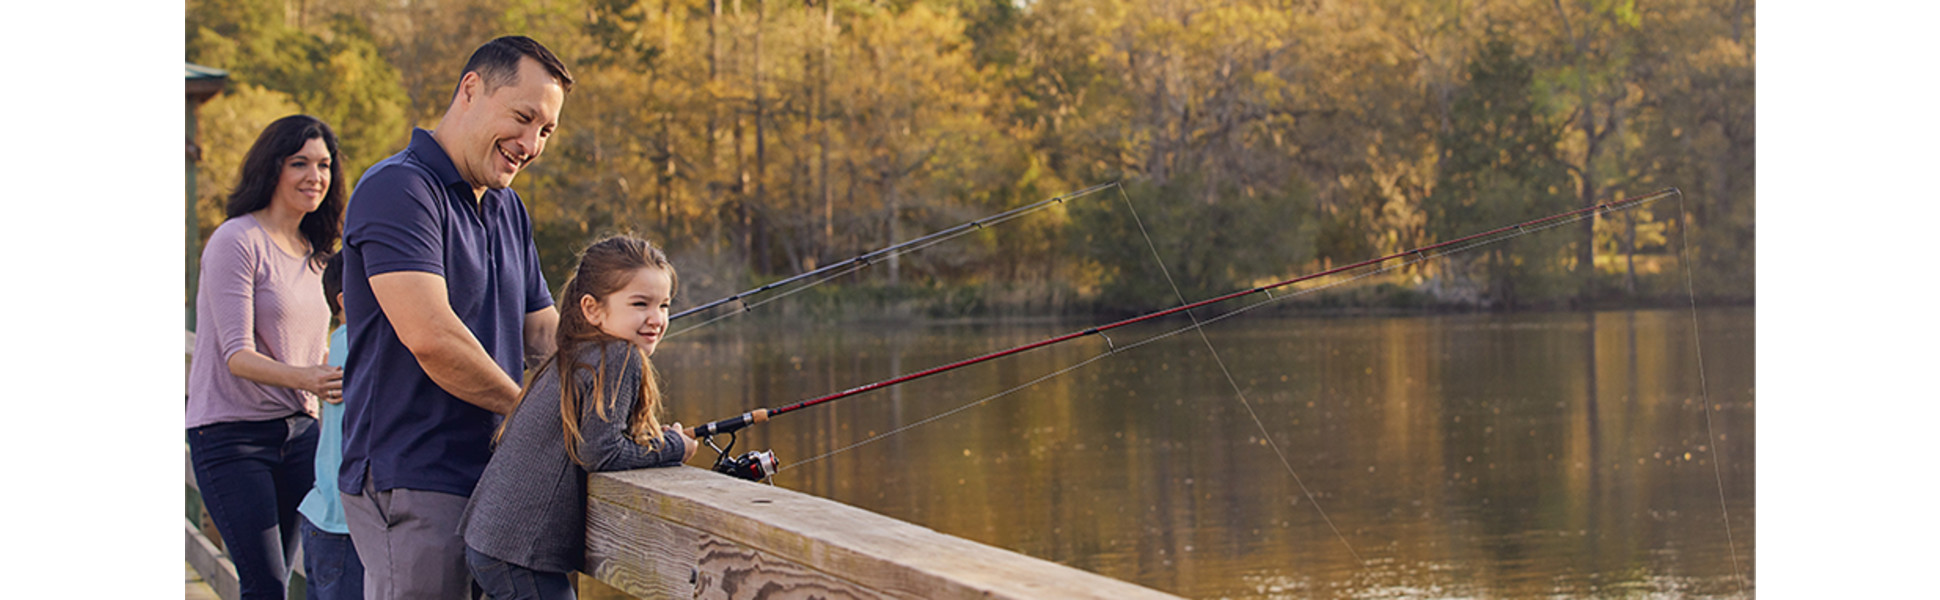 Shimano Fishing Rod & Reel Sienna Spinning Combo Freshwater, Combo